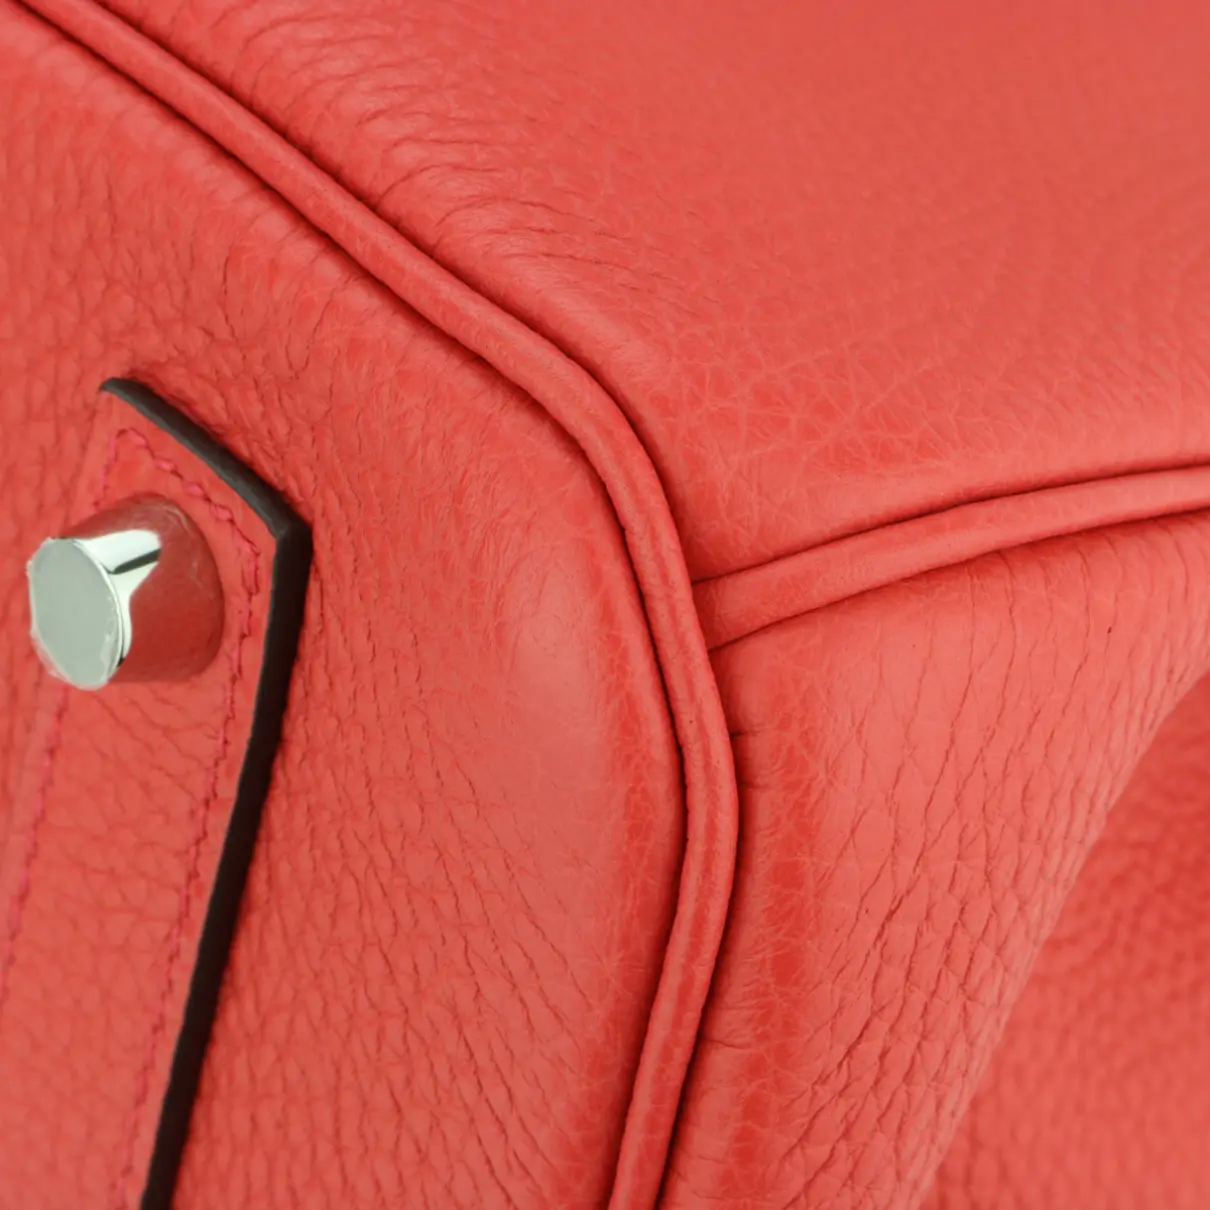 Birkin 35 leather handbag Hermès